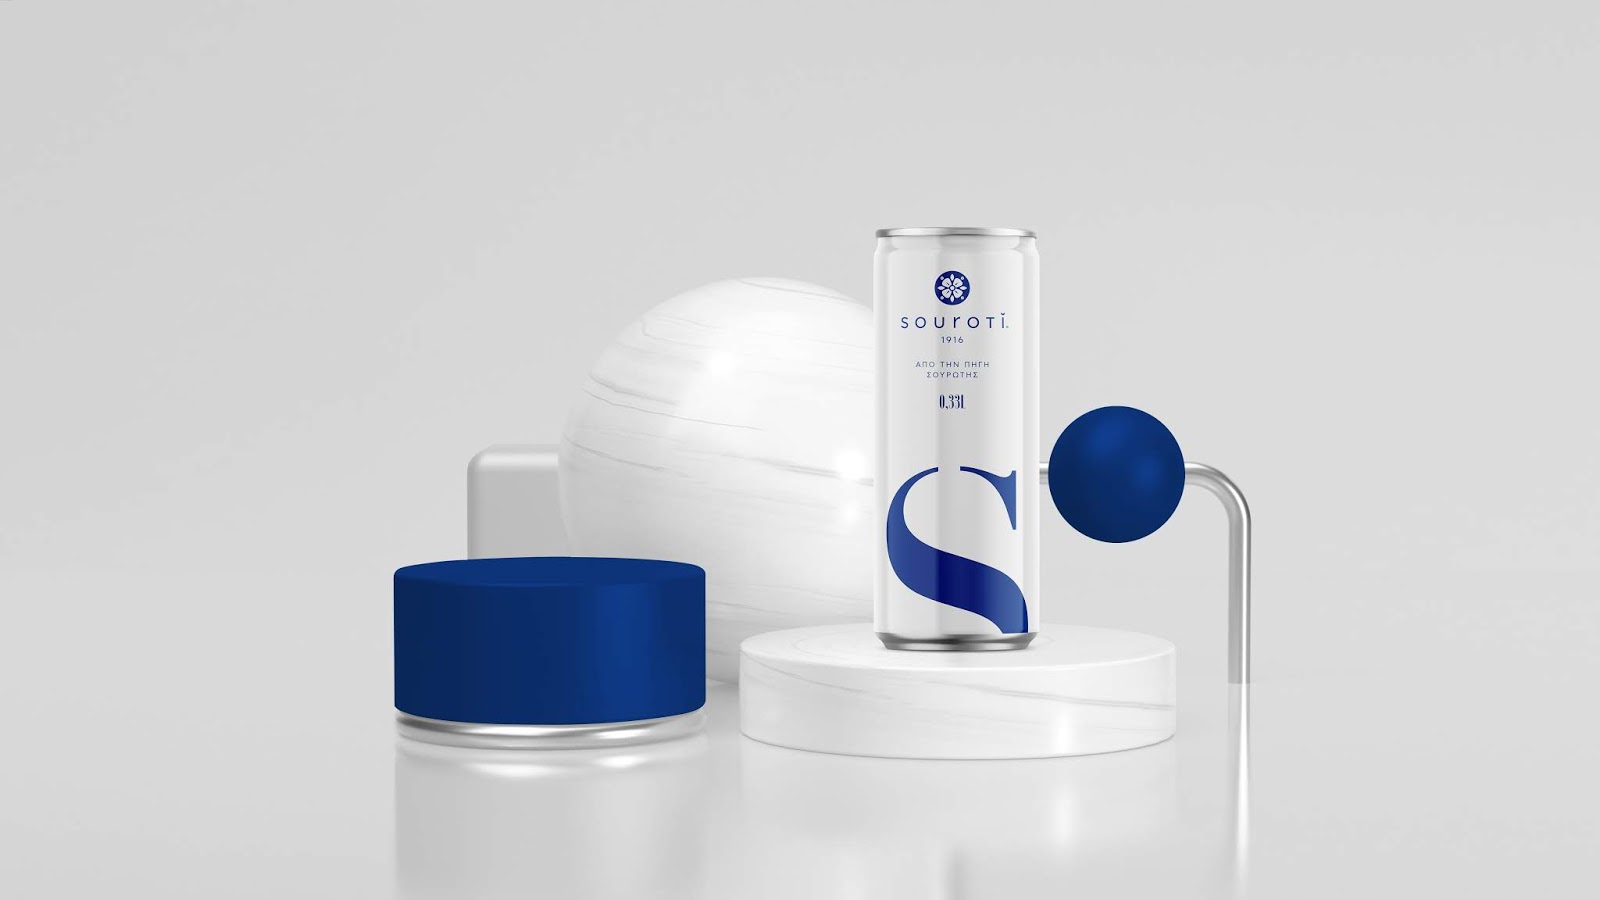 Souroti碳酸饮料包装设计